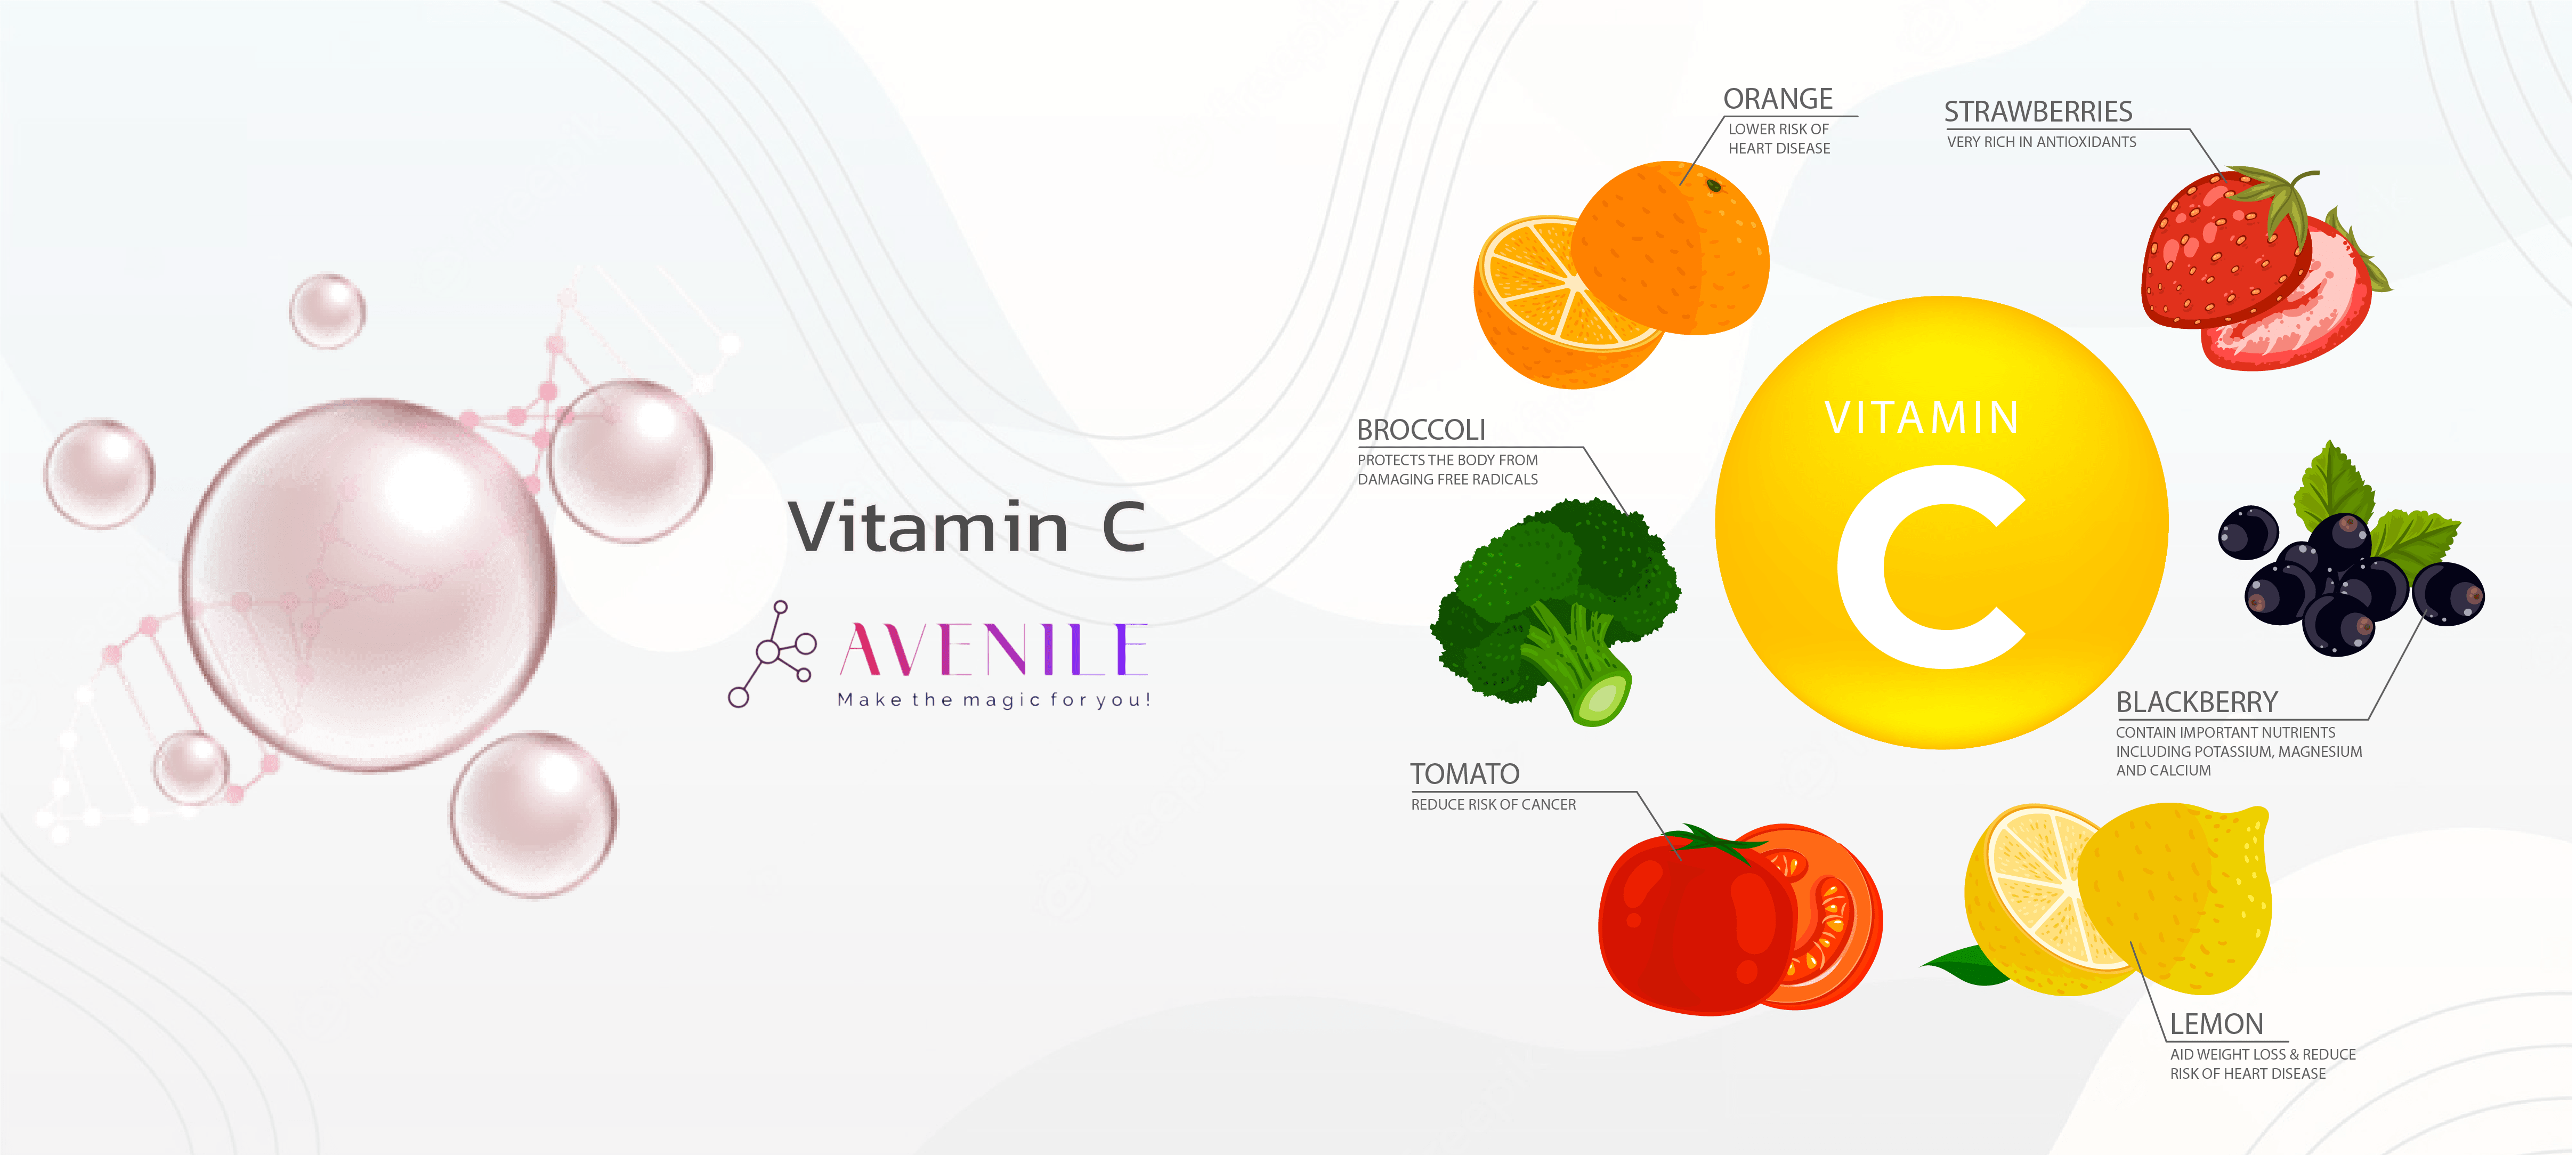 Avenile Vitamin C